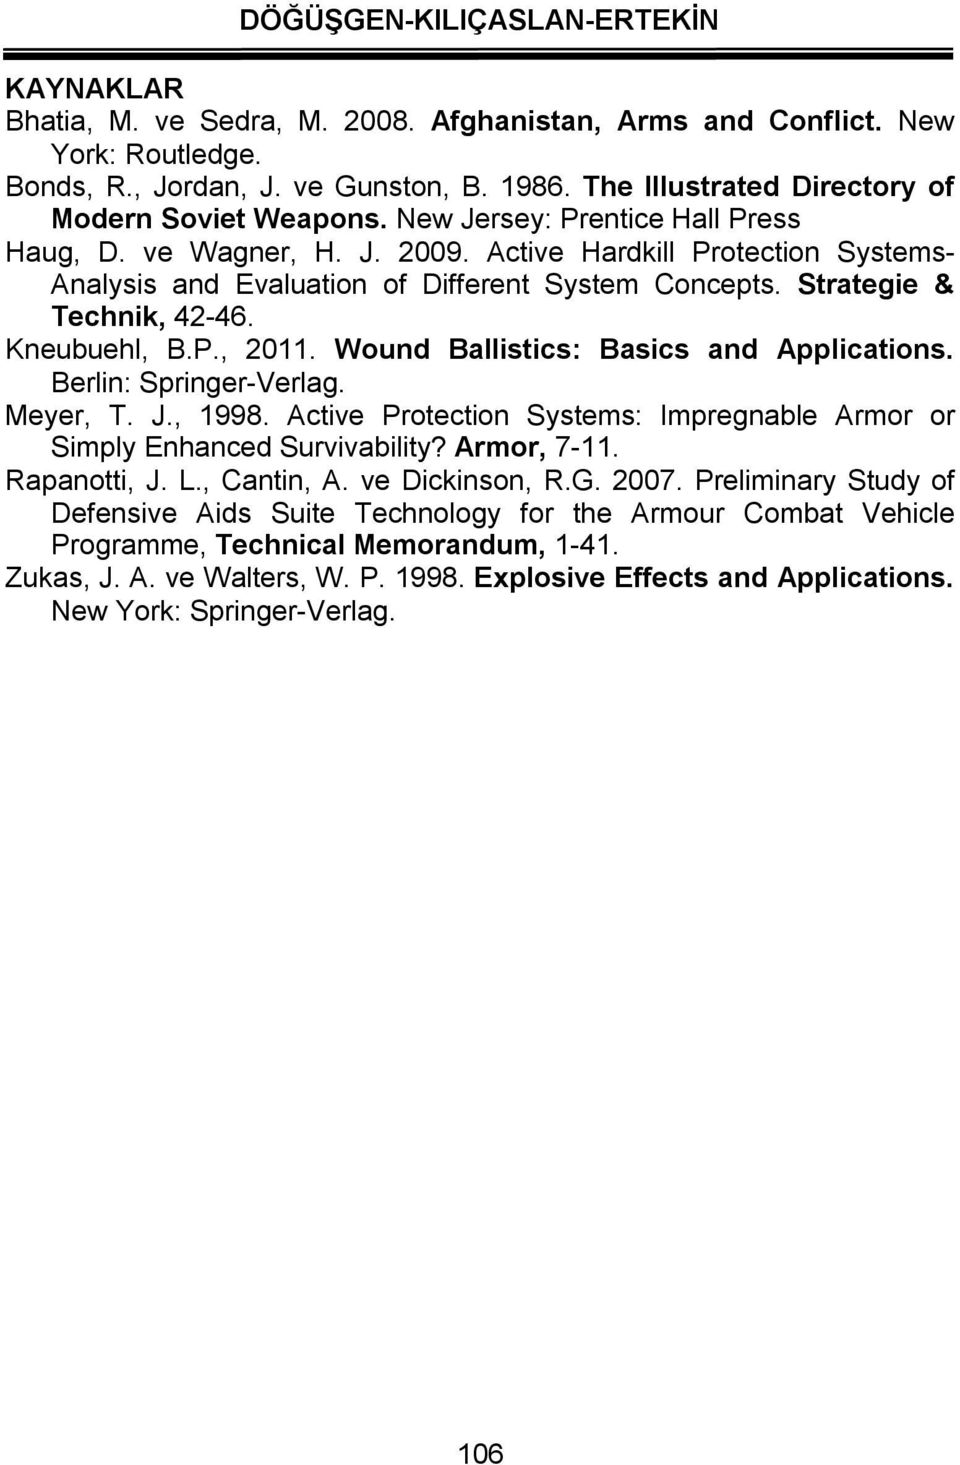 Wound Ballistics: Basics and Applications. Berlin: Springer-Verlag. Meyer, T. J., 1998. Active Protection Systems: Impregnable Armor or Simply Enhanced Survivability? Armor, 7-11. Rapanotti, J. L.